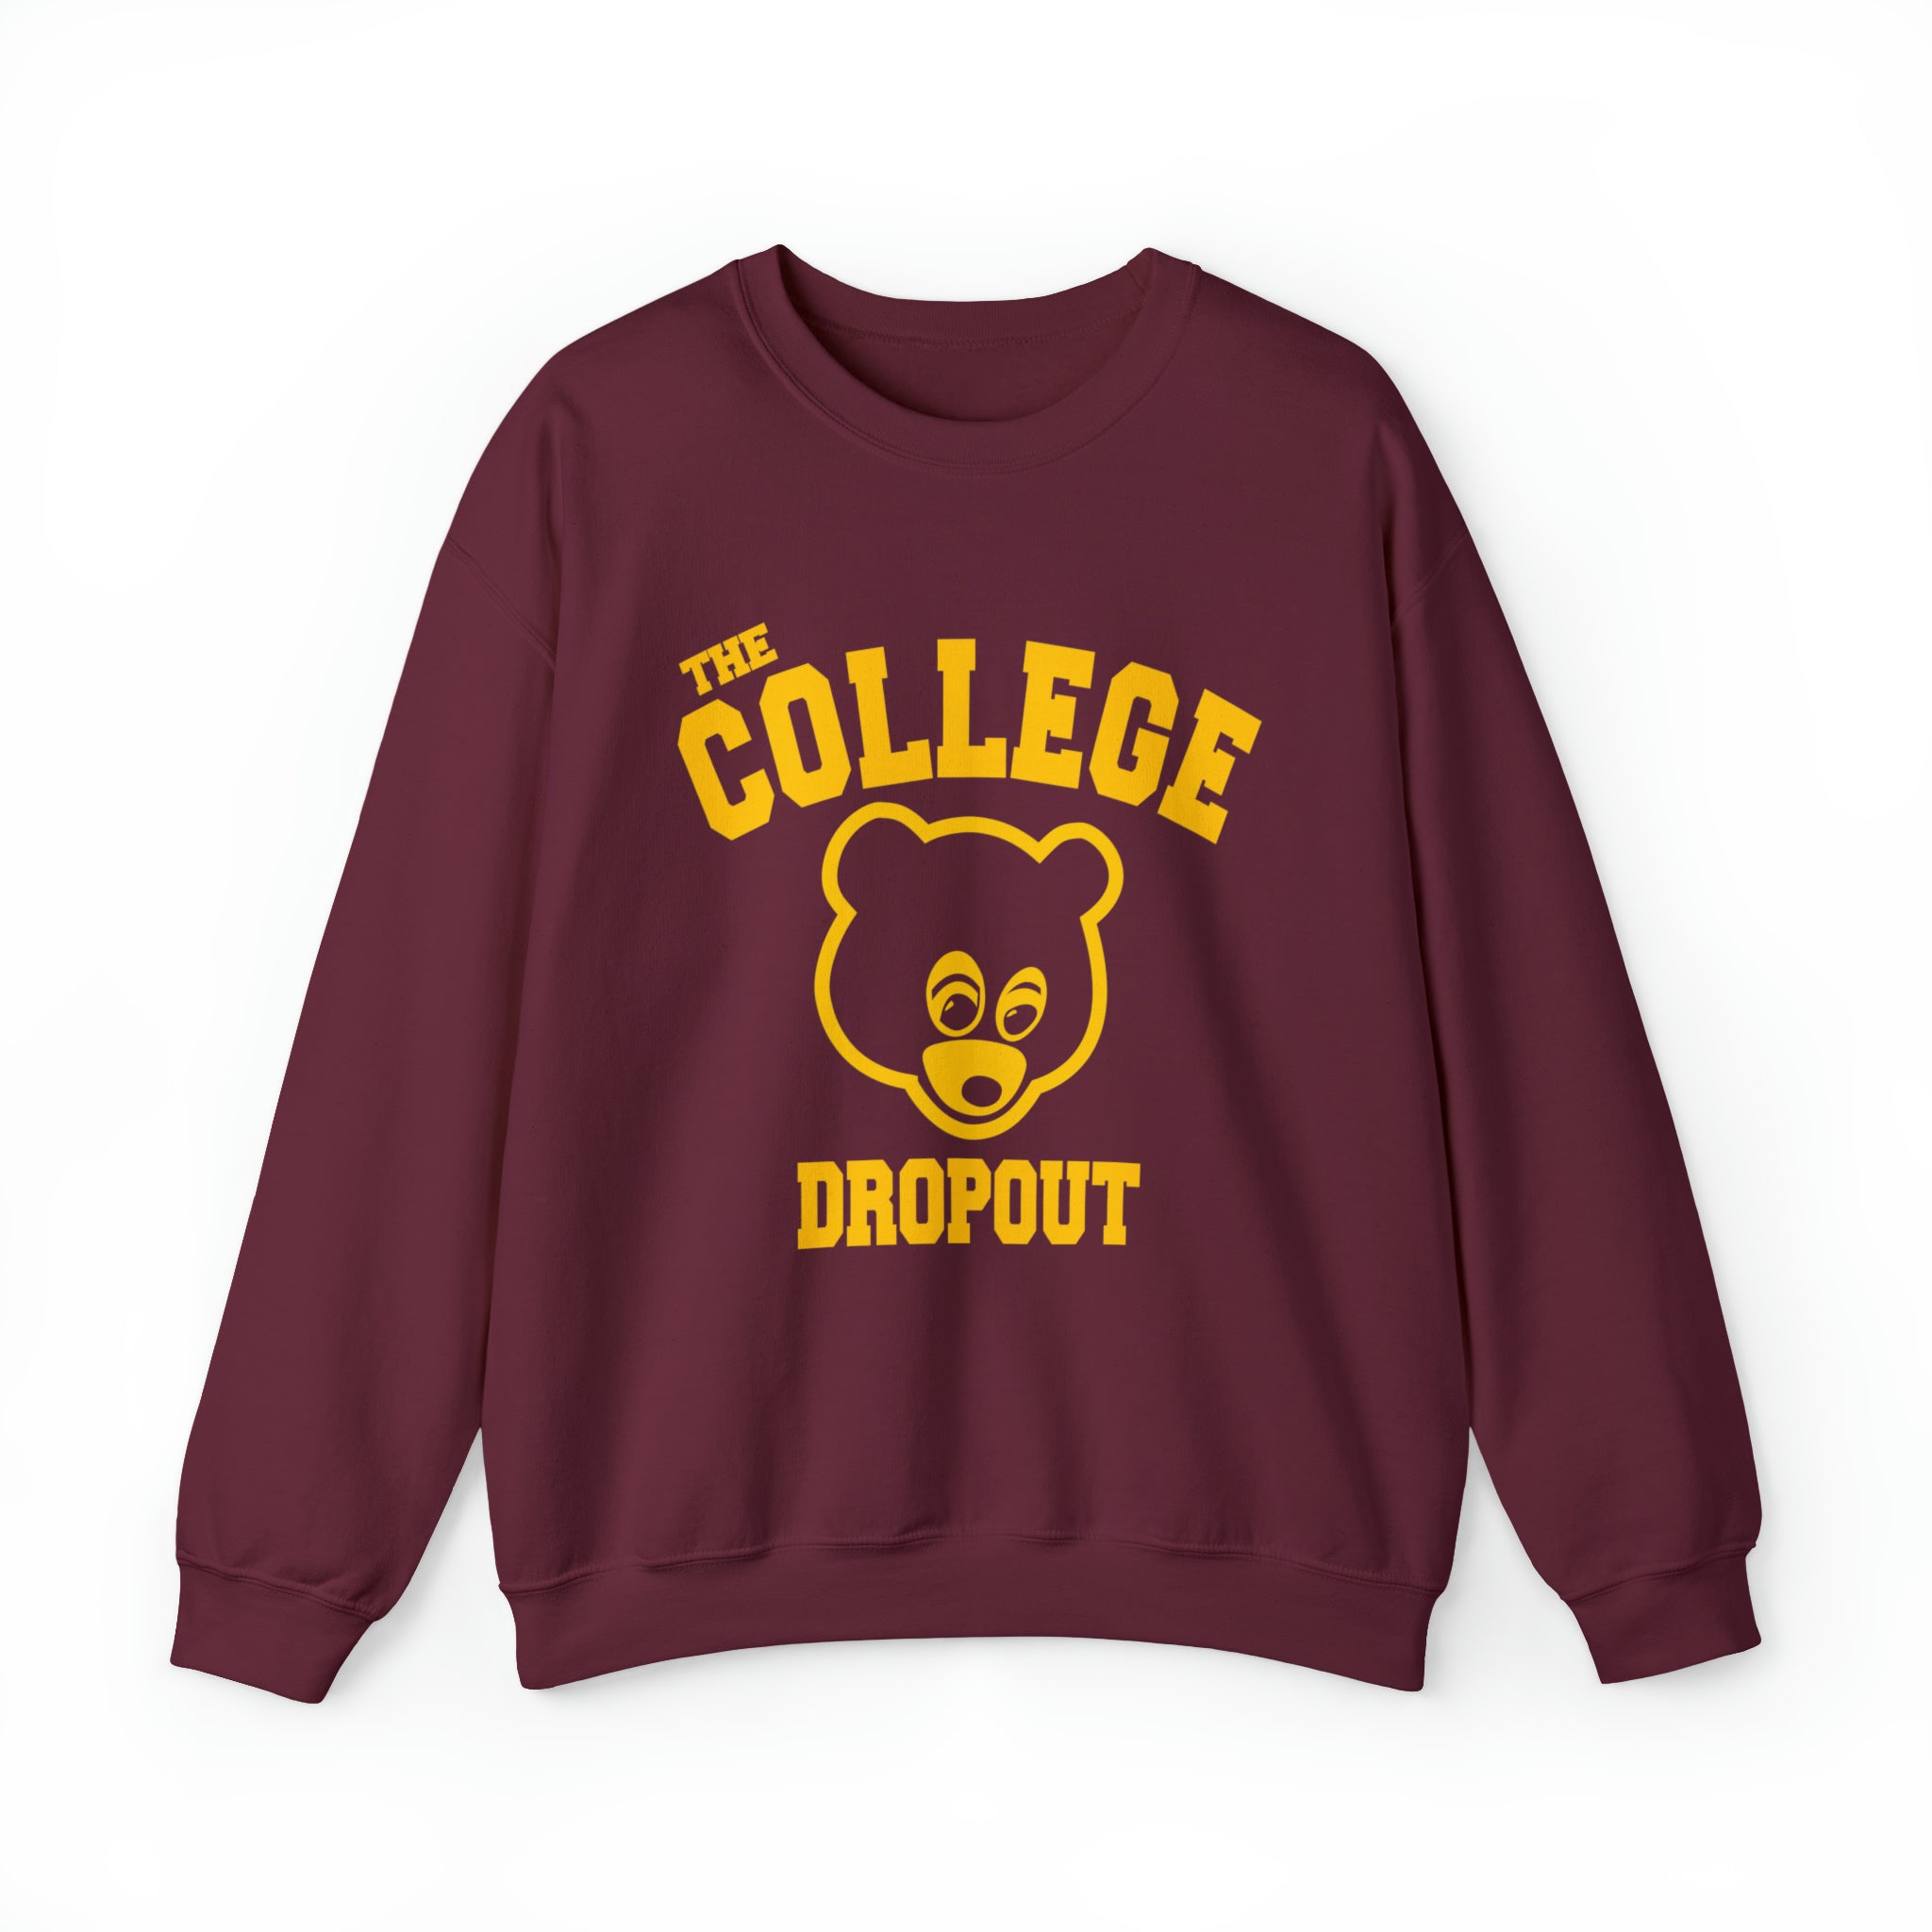 The College Dropout Crewneck Sweatshirt - Old Kanye West